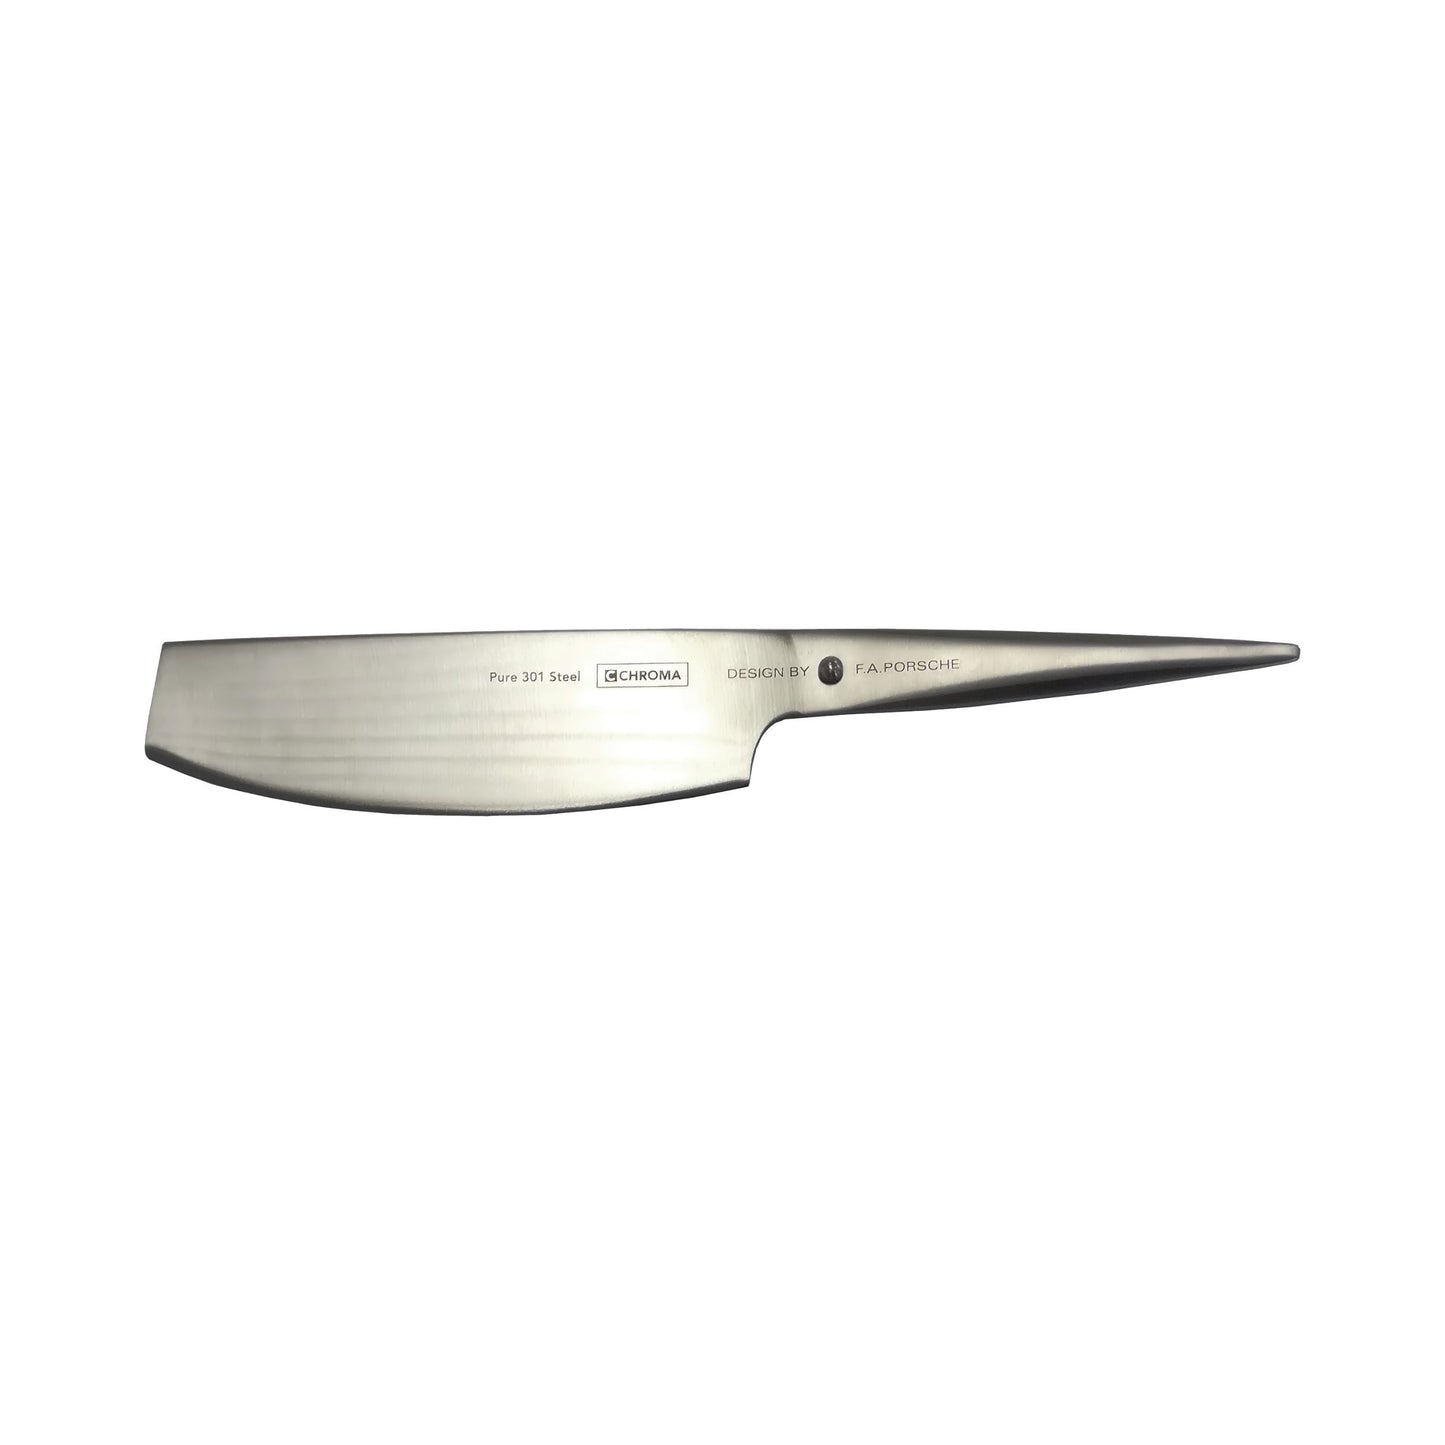 Type 301 - Herb/vegetable knife, 15.0cm